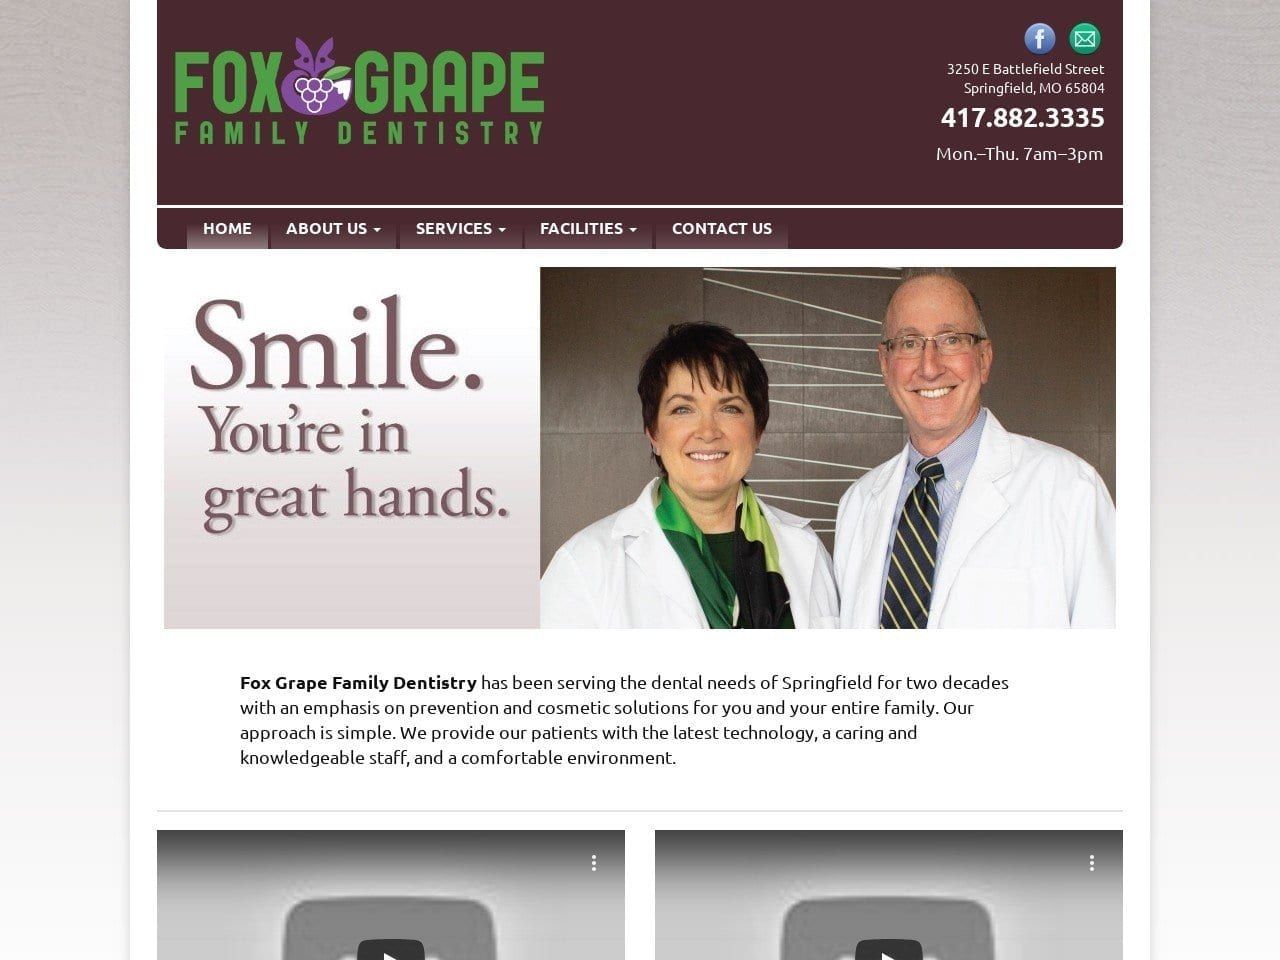 Fox Grape Family Dentistry Website Screenshot from foxgrapefamilydentistry.com